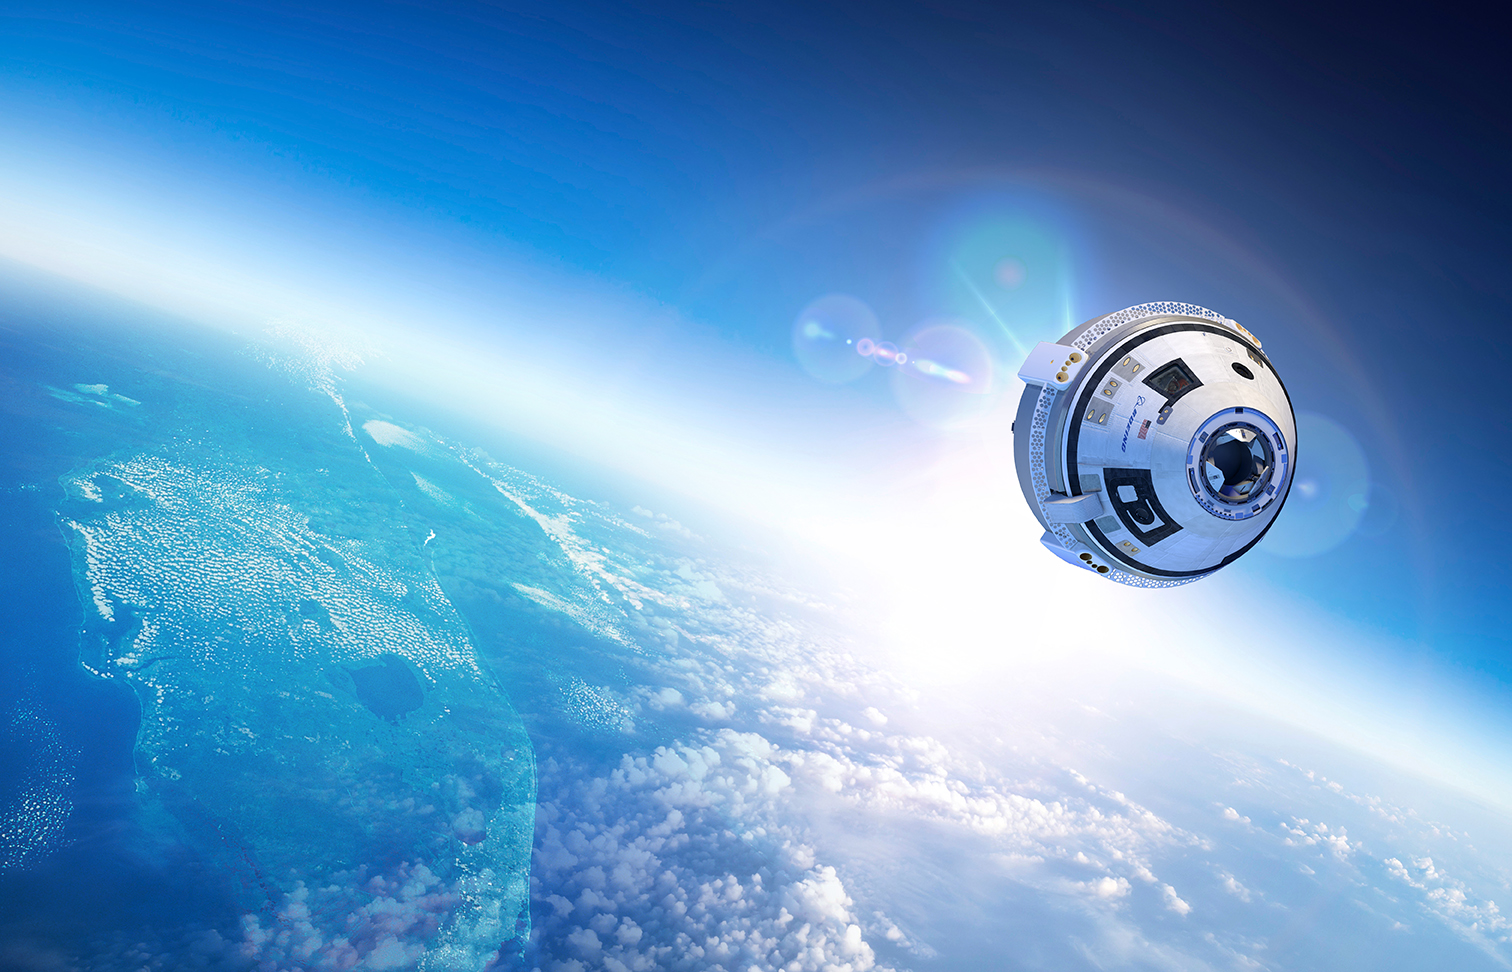 Boeing Begins a New Era in Space